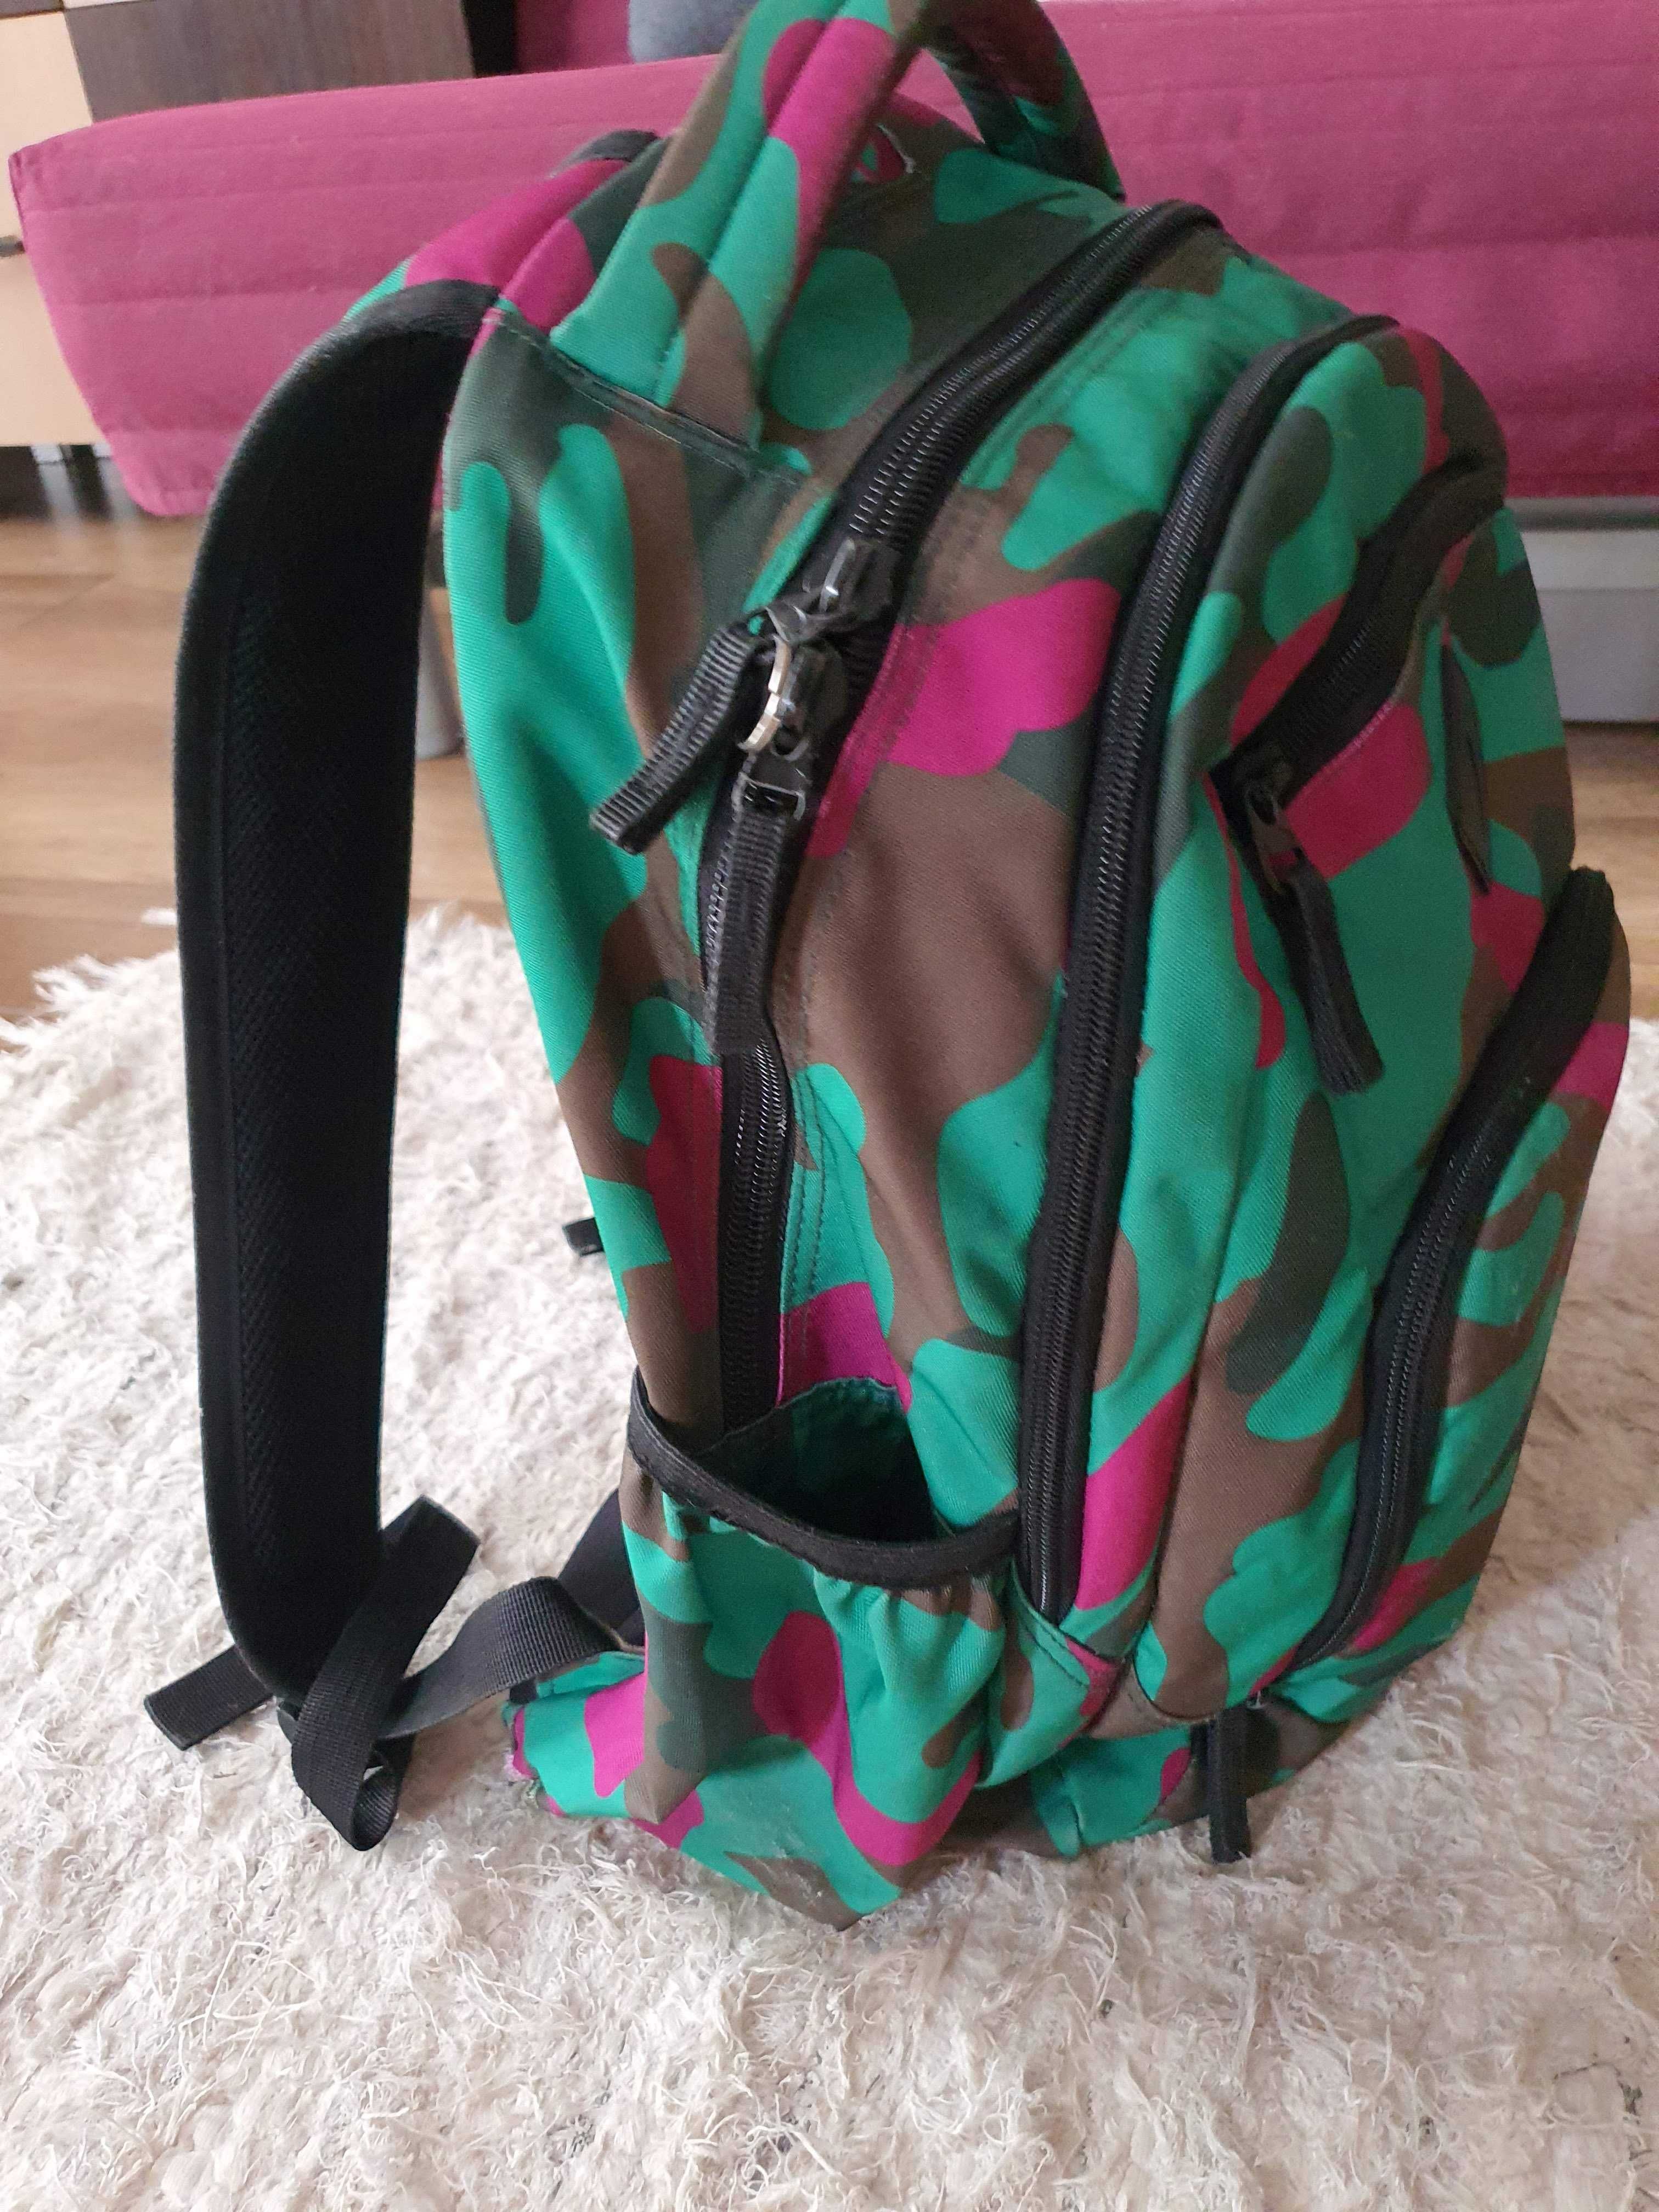 Plecak CoolPack - duży, pojemny